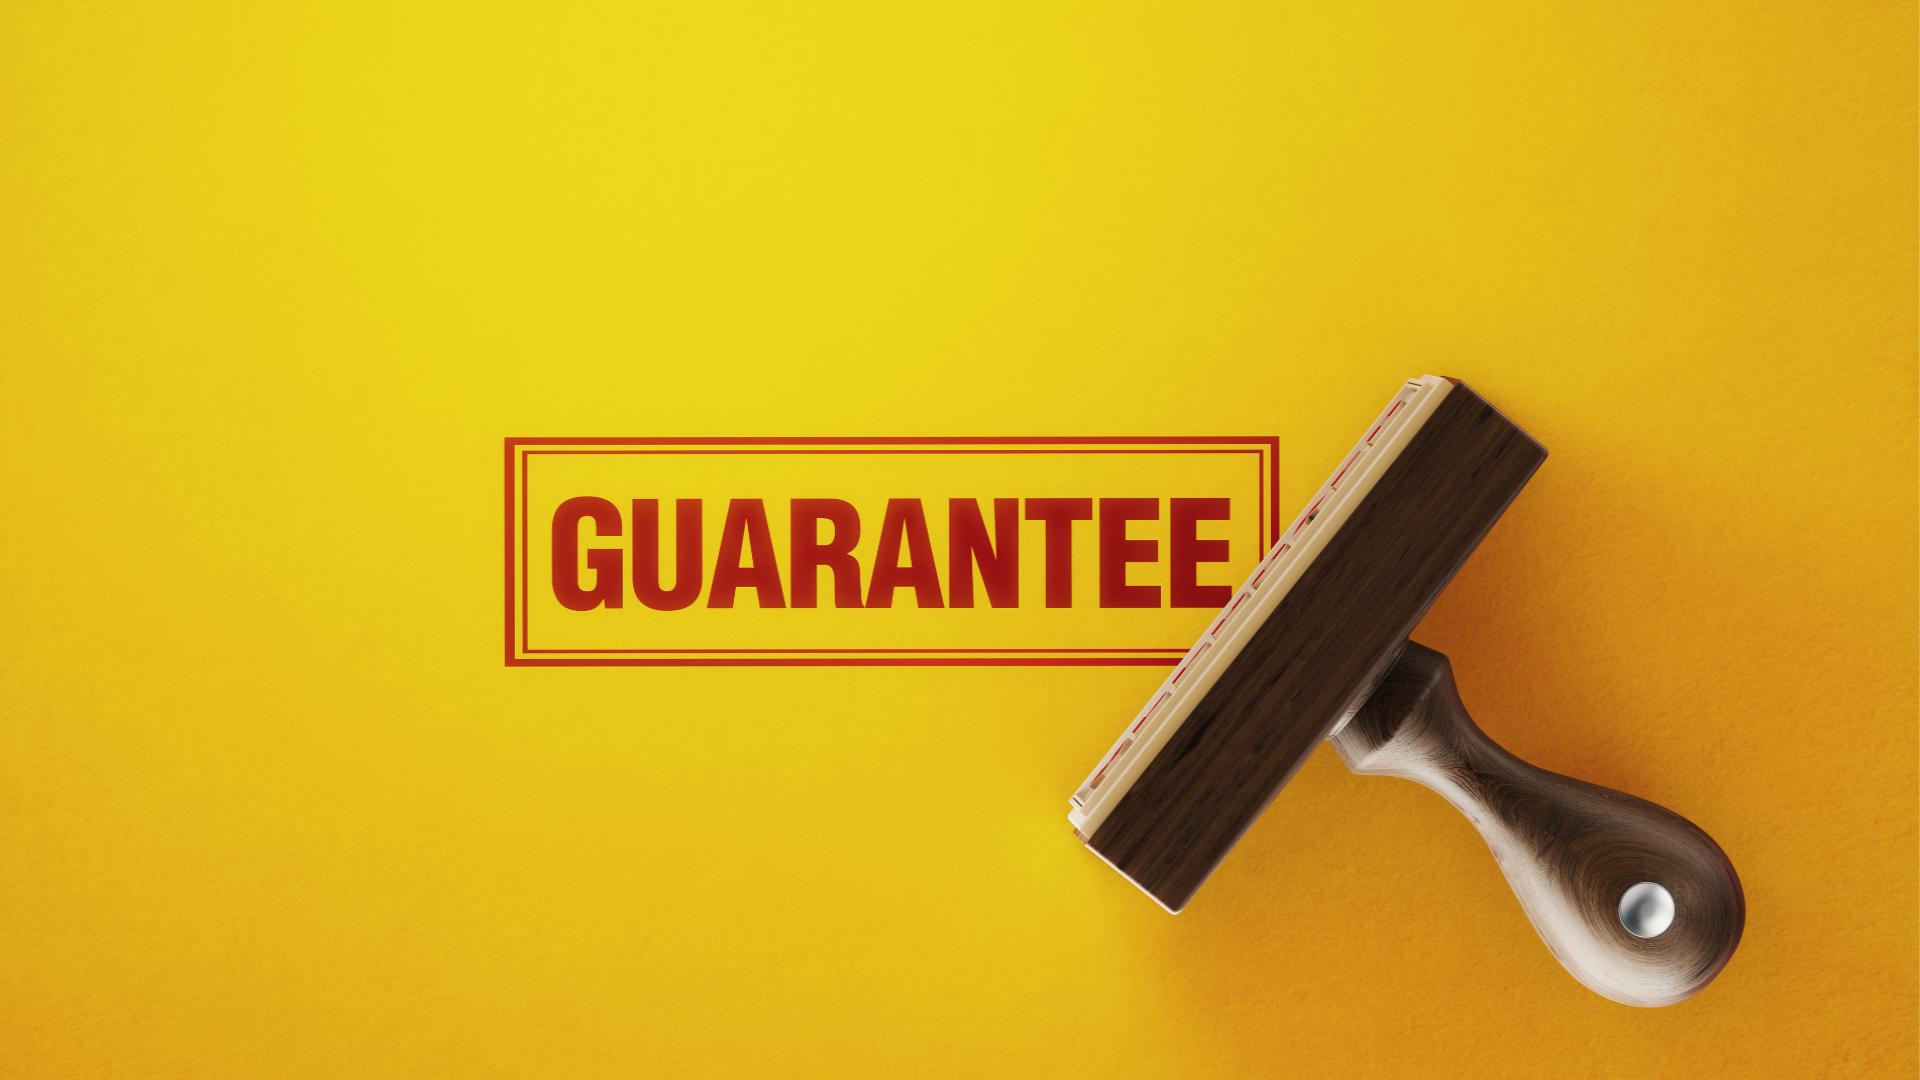 insurance lead generation risk free guarantee image